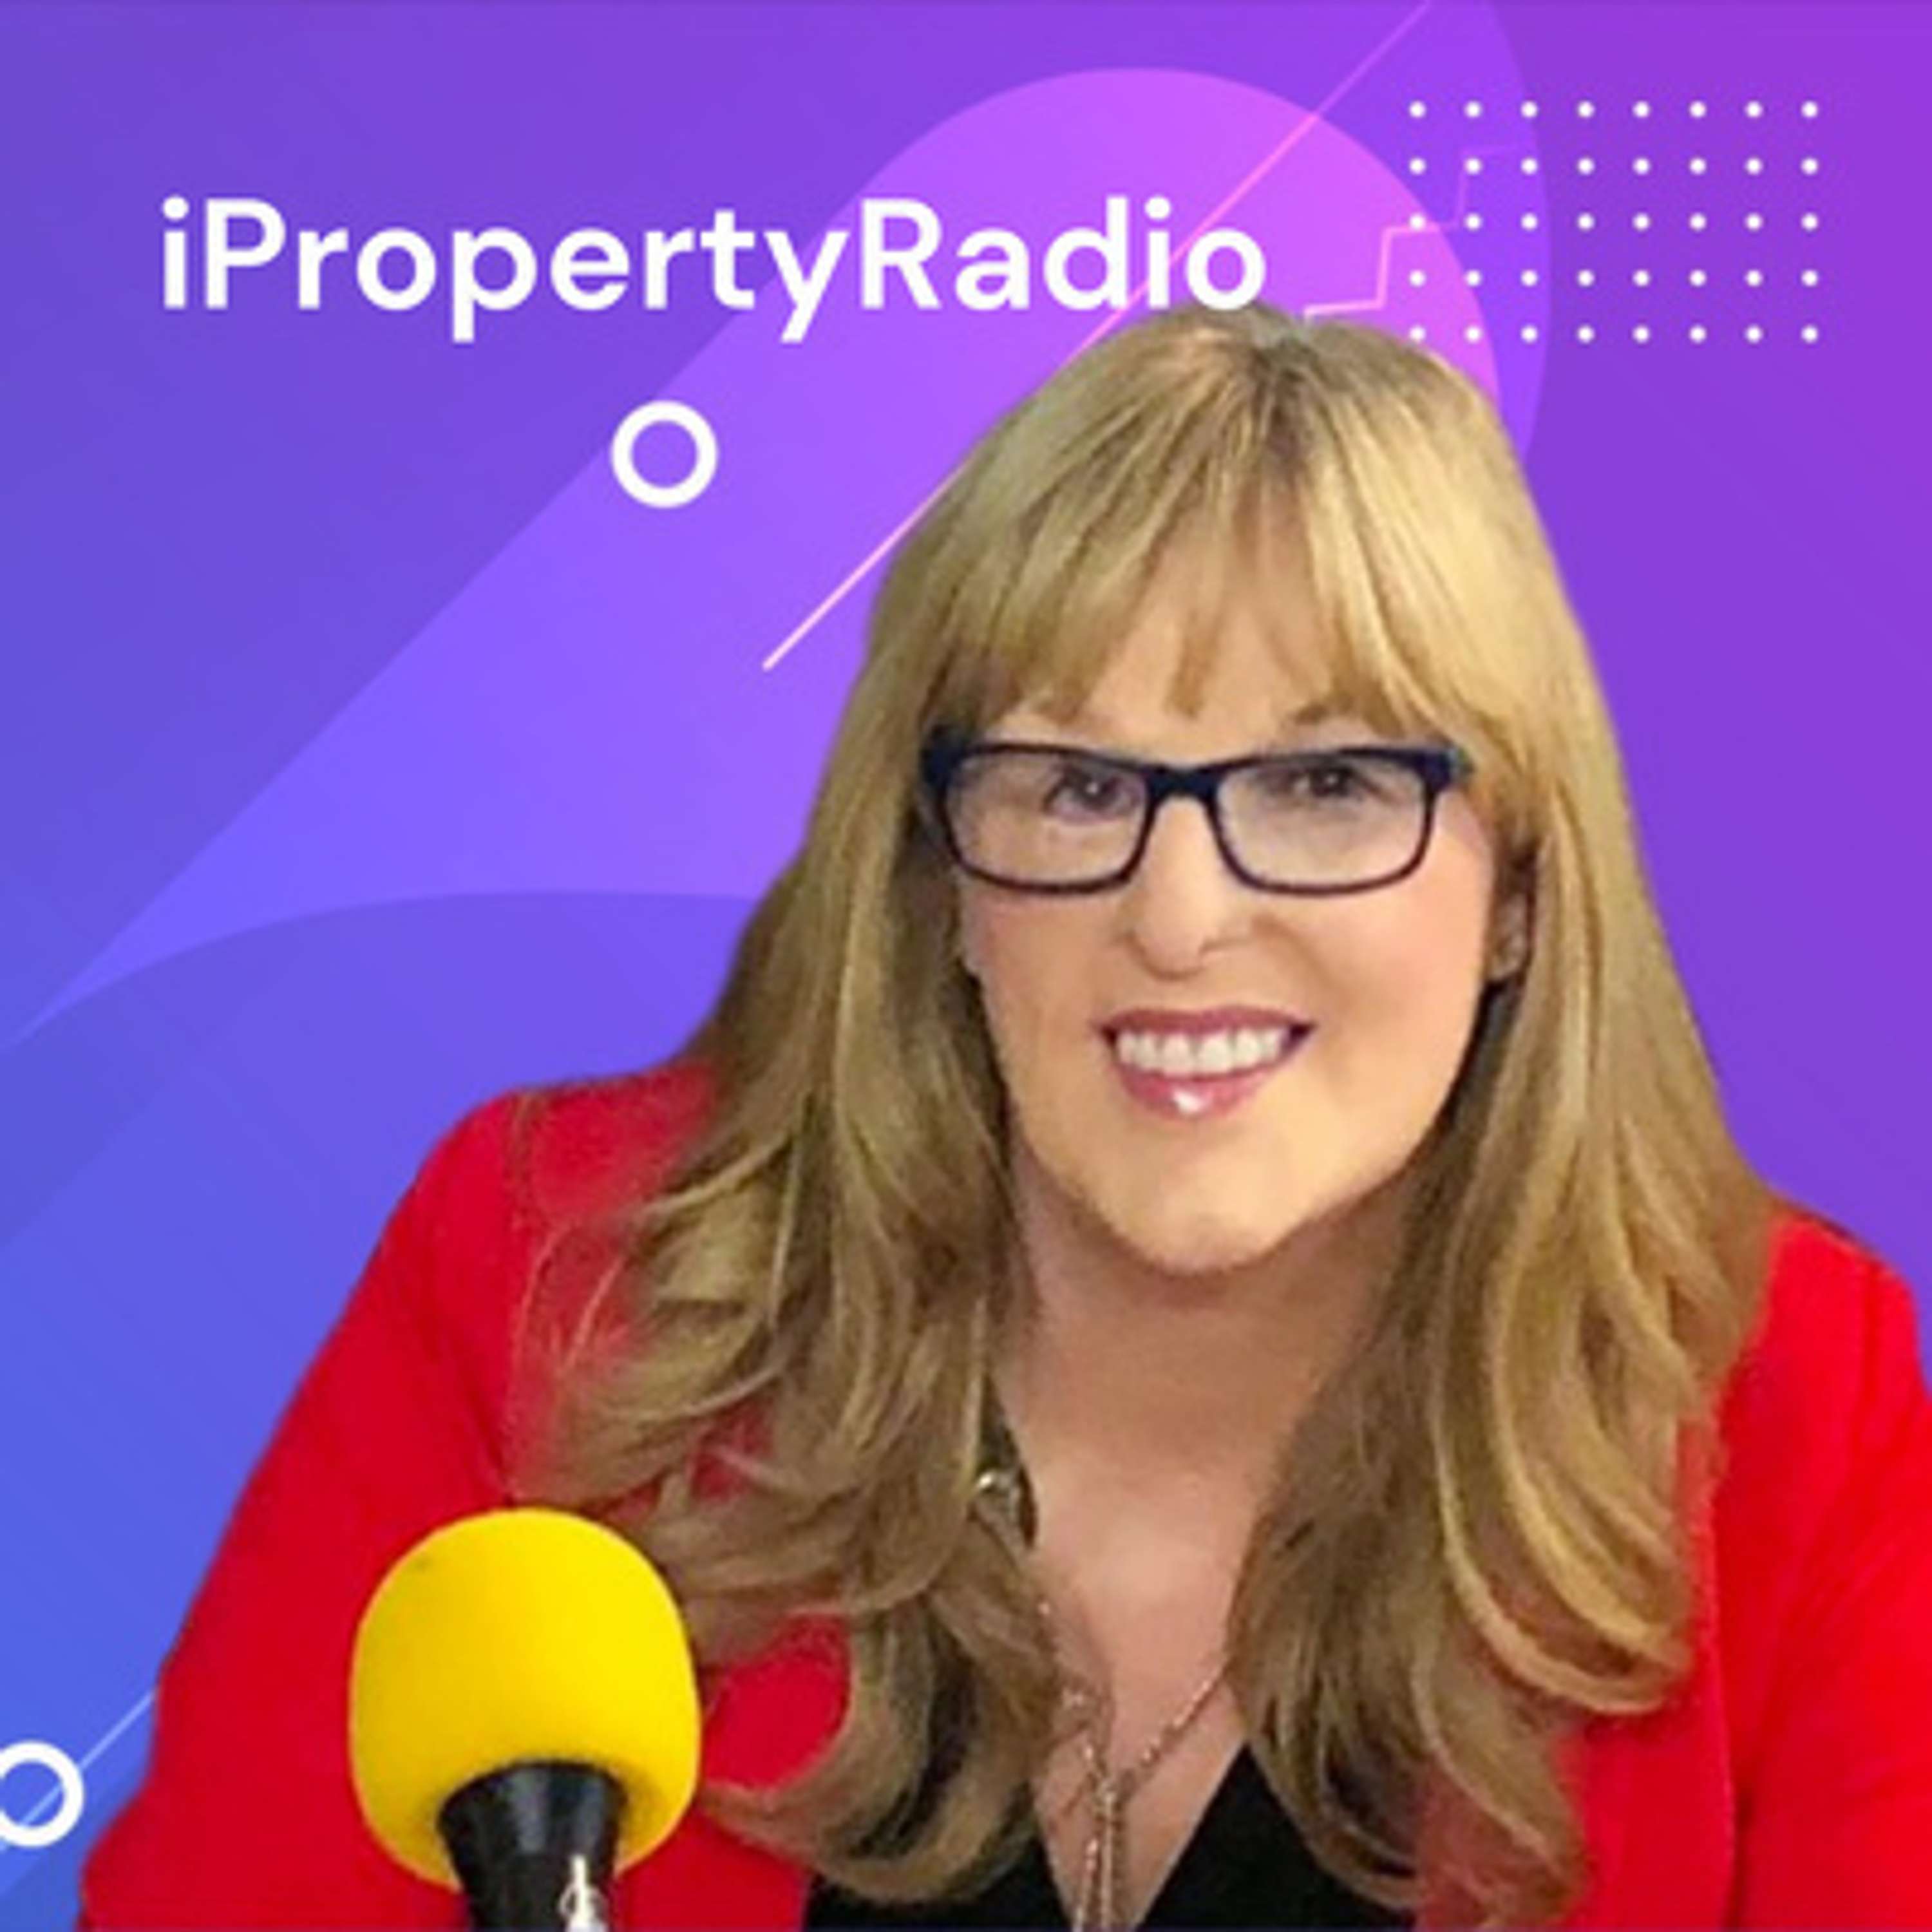 Ep.12 iPropertyRadio: Property Matters, April 9th 2019